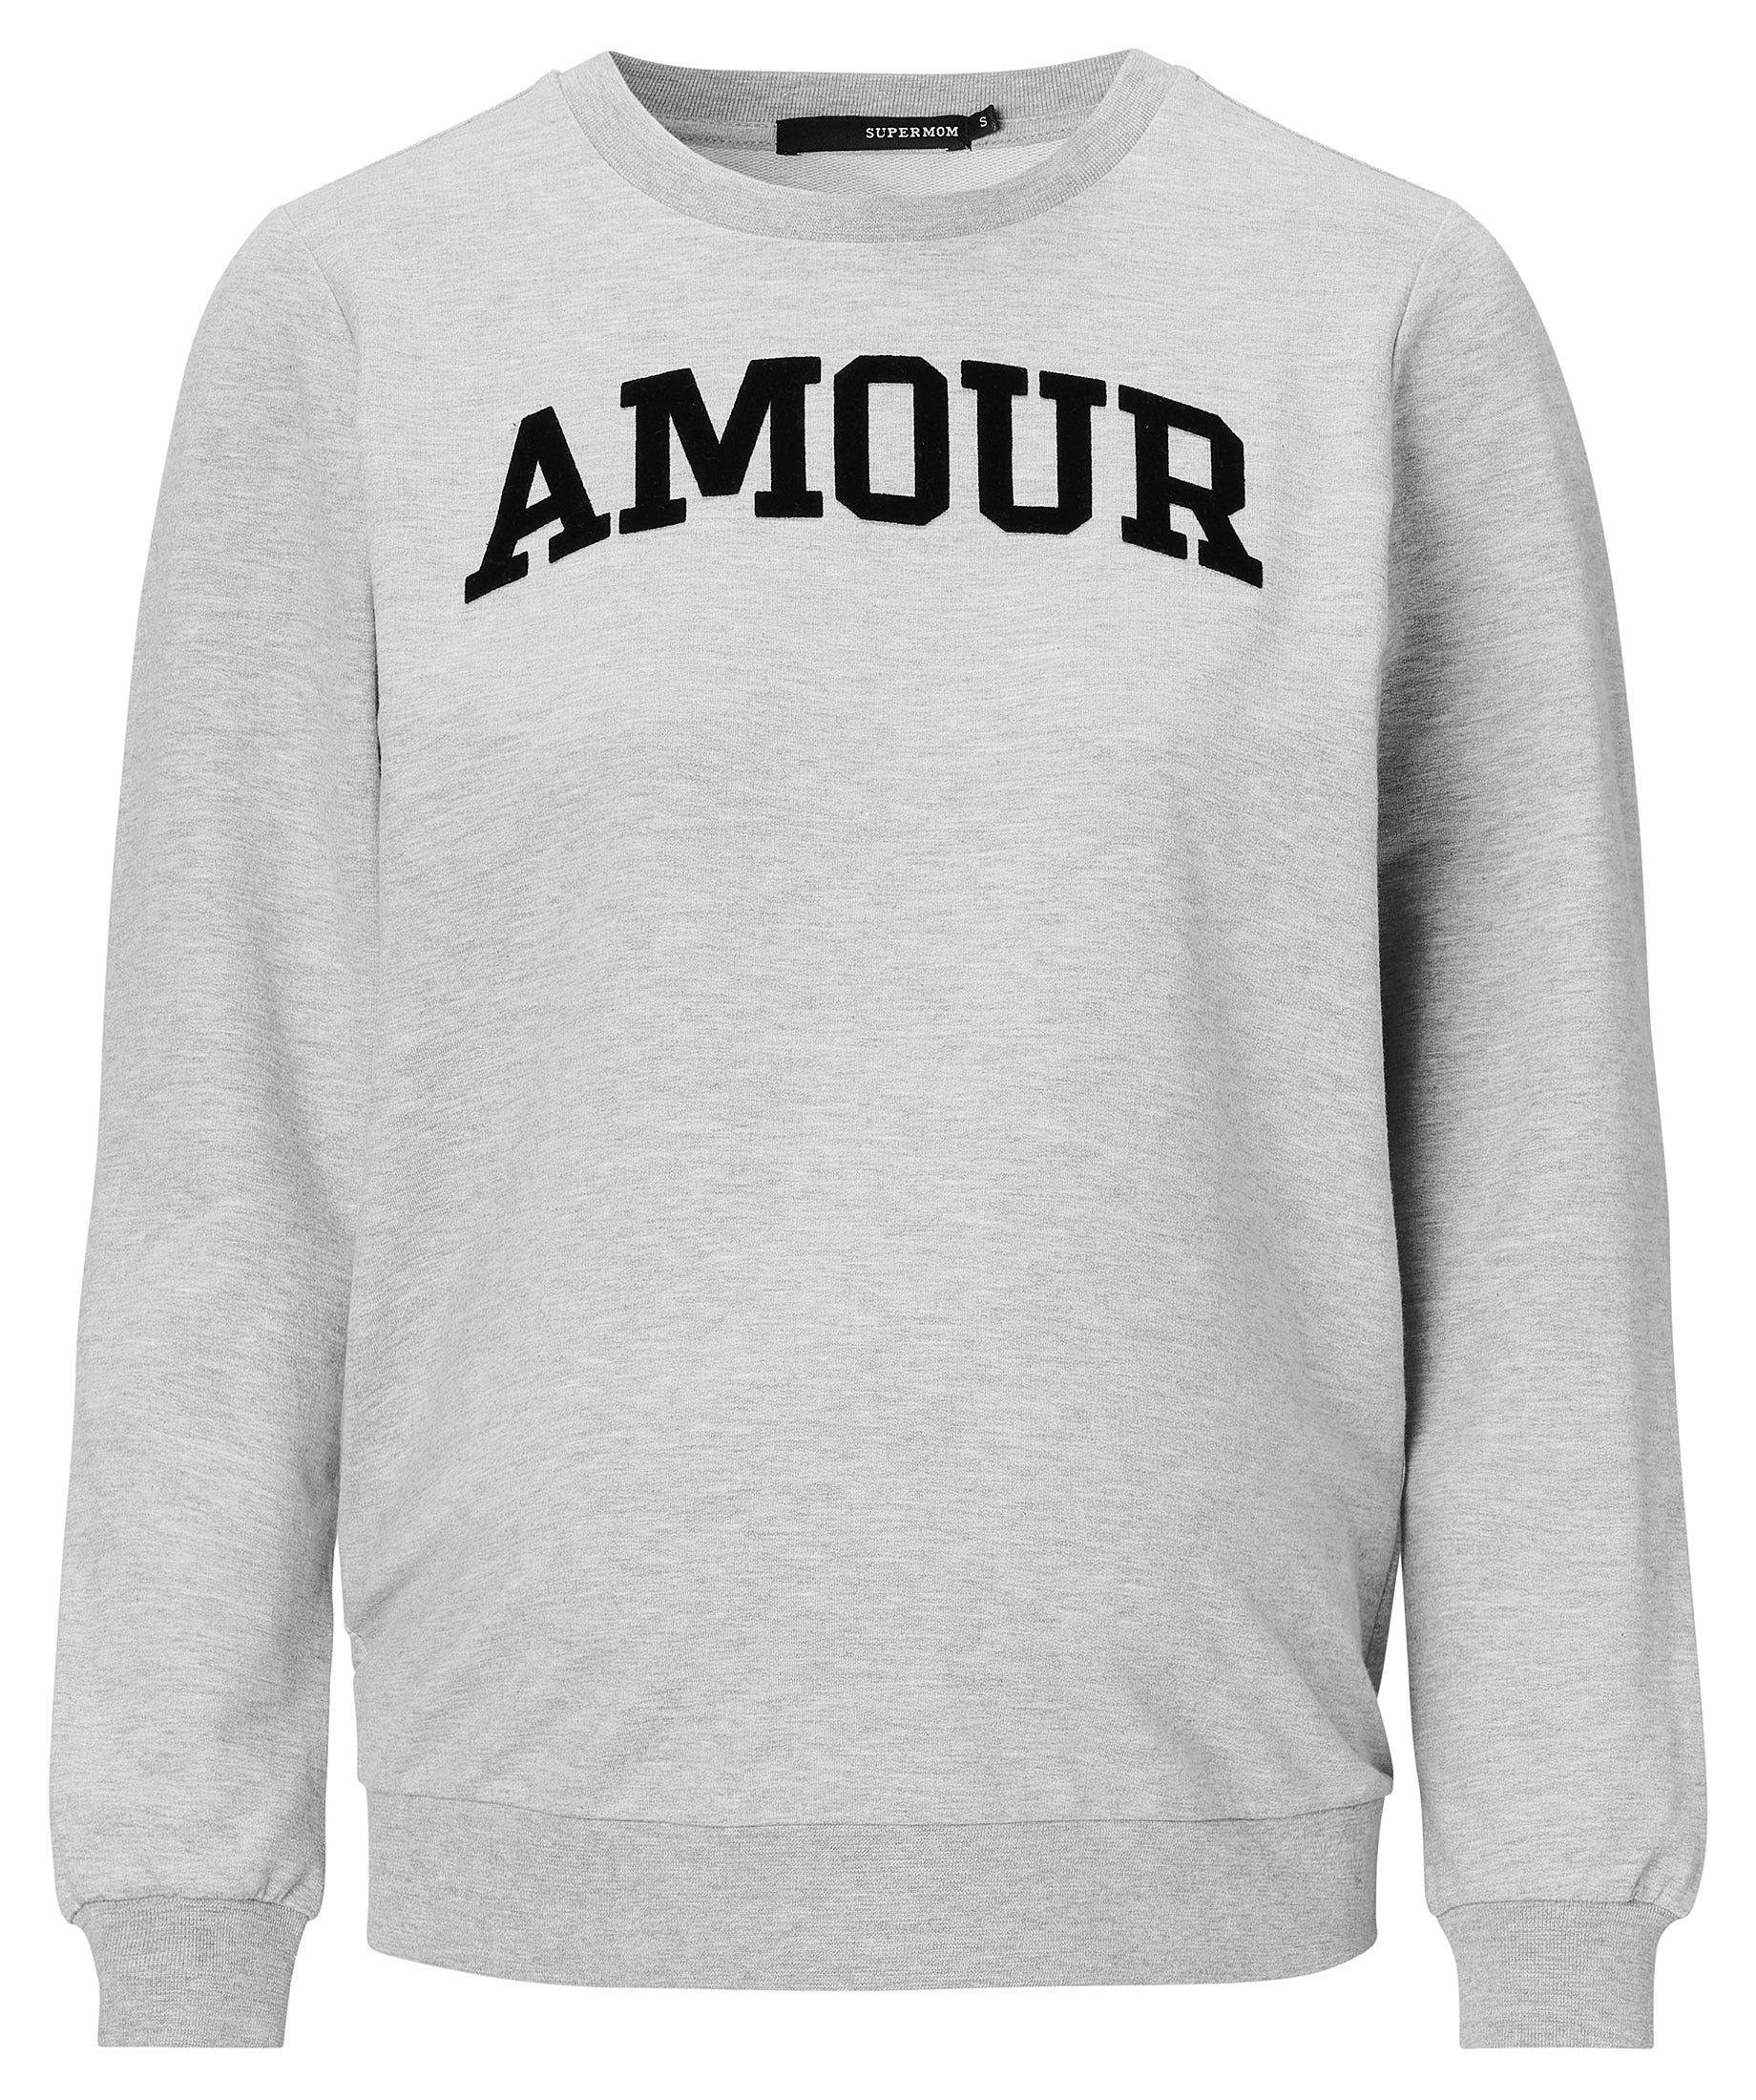 Sweater Amour - Grey Melange